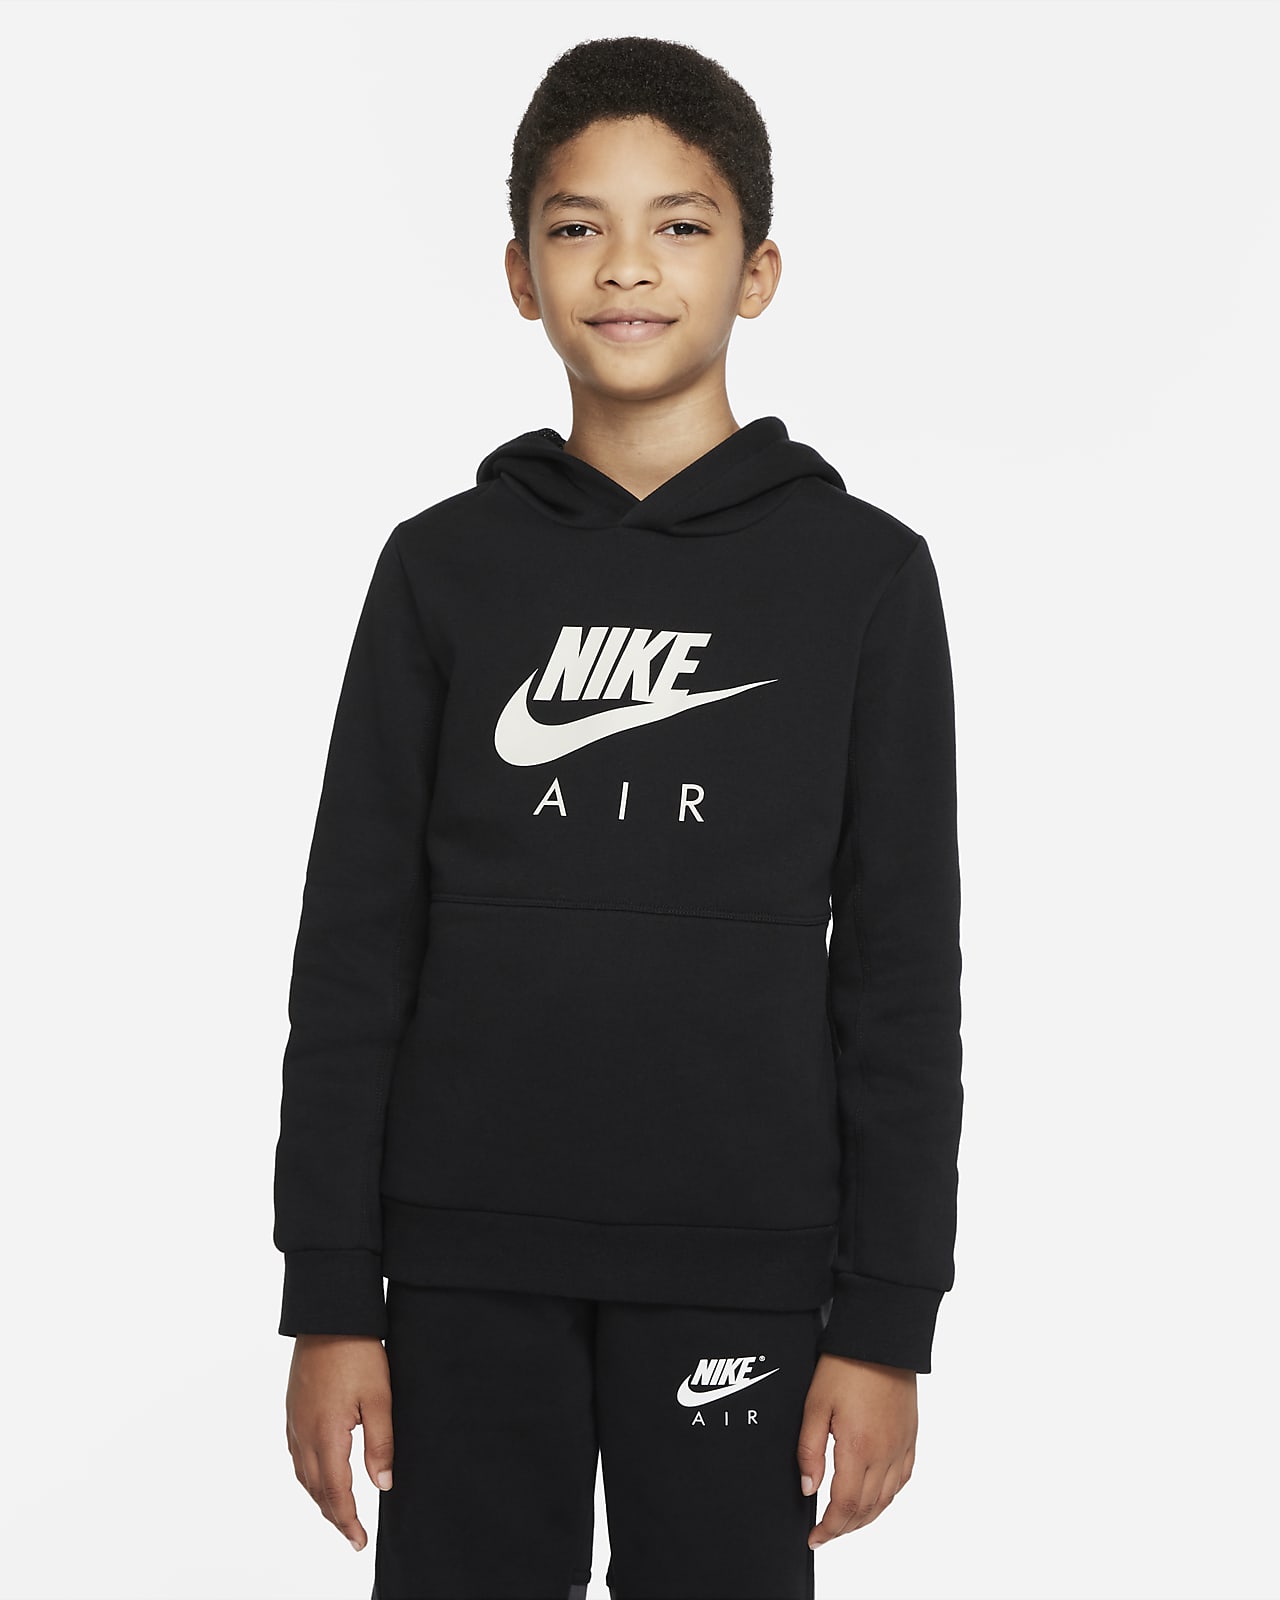 Huvtröja Nike Air för ungdom (killar)